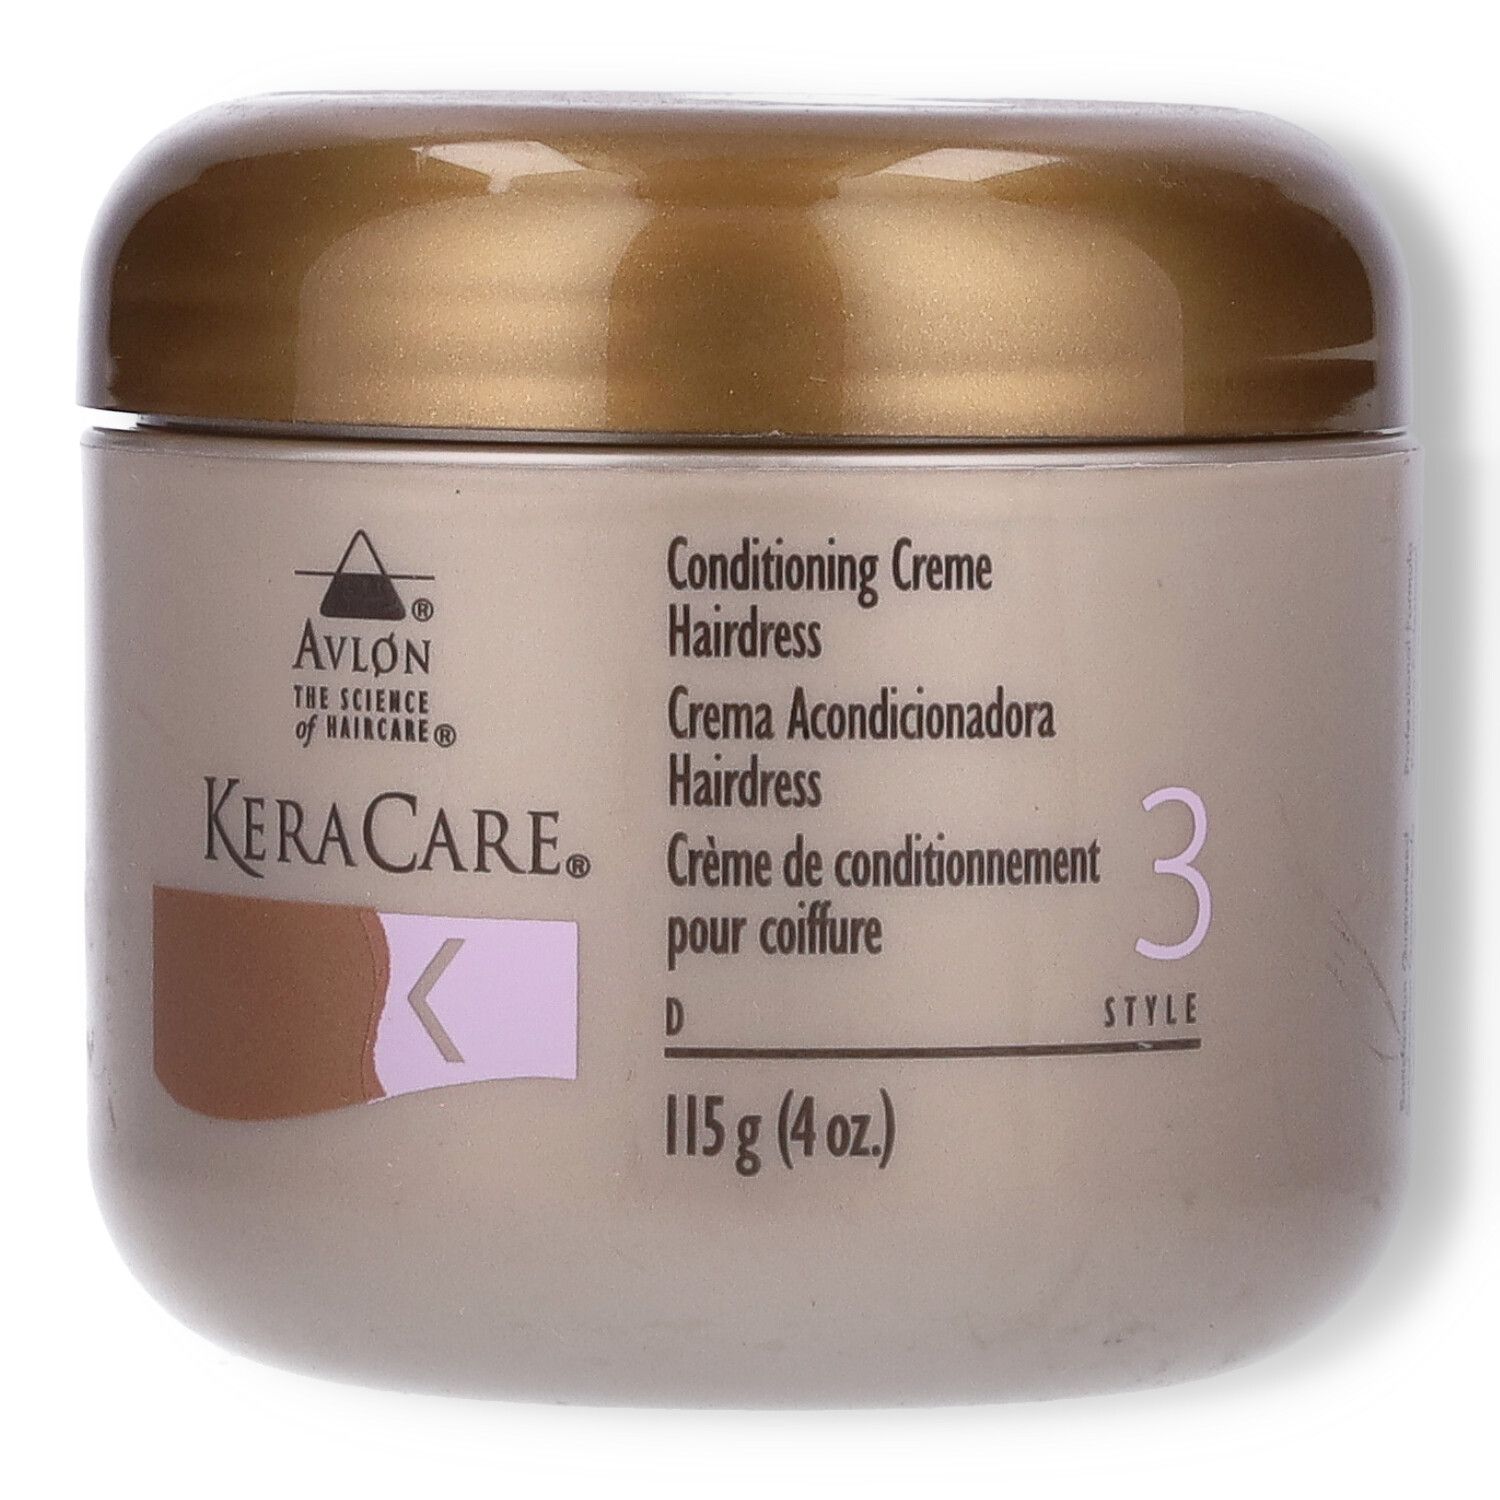 KeraCare Conditioning Creme Hairdress - 4oz